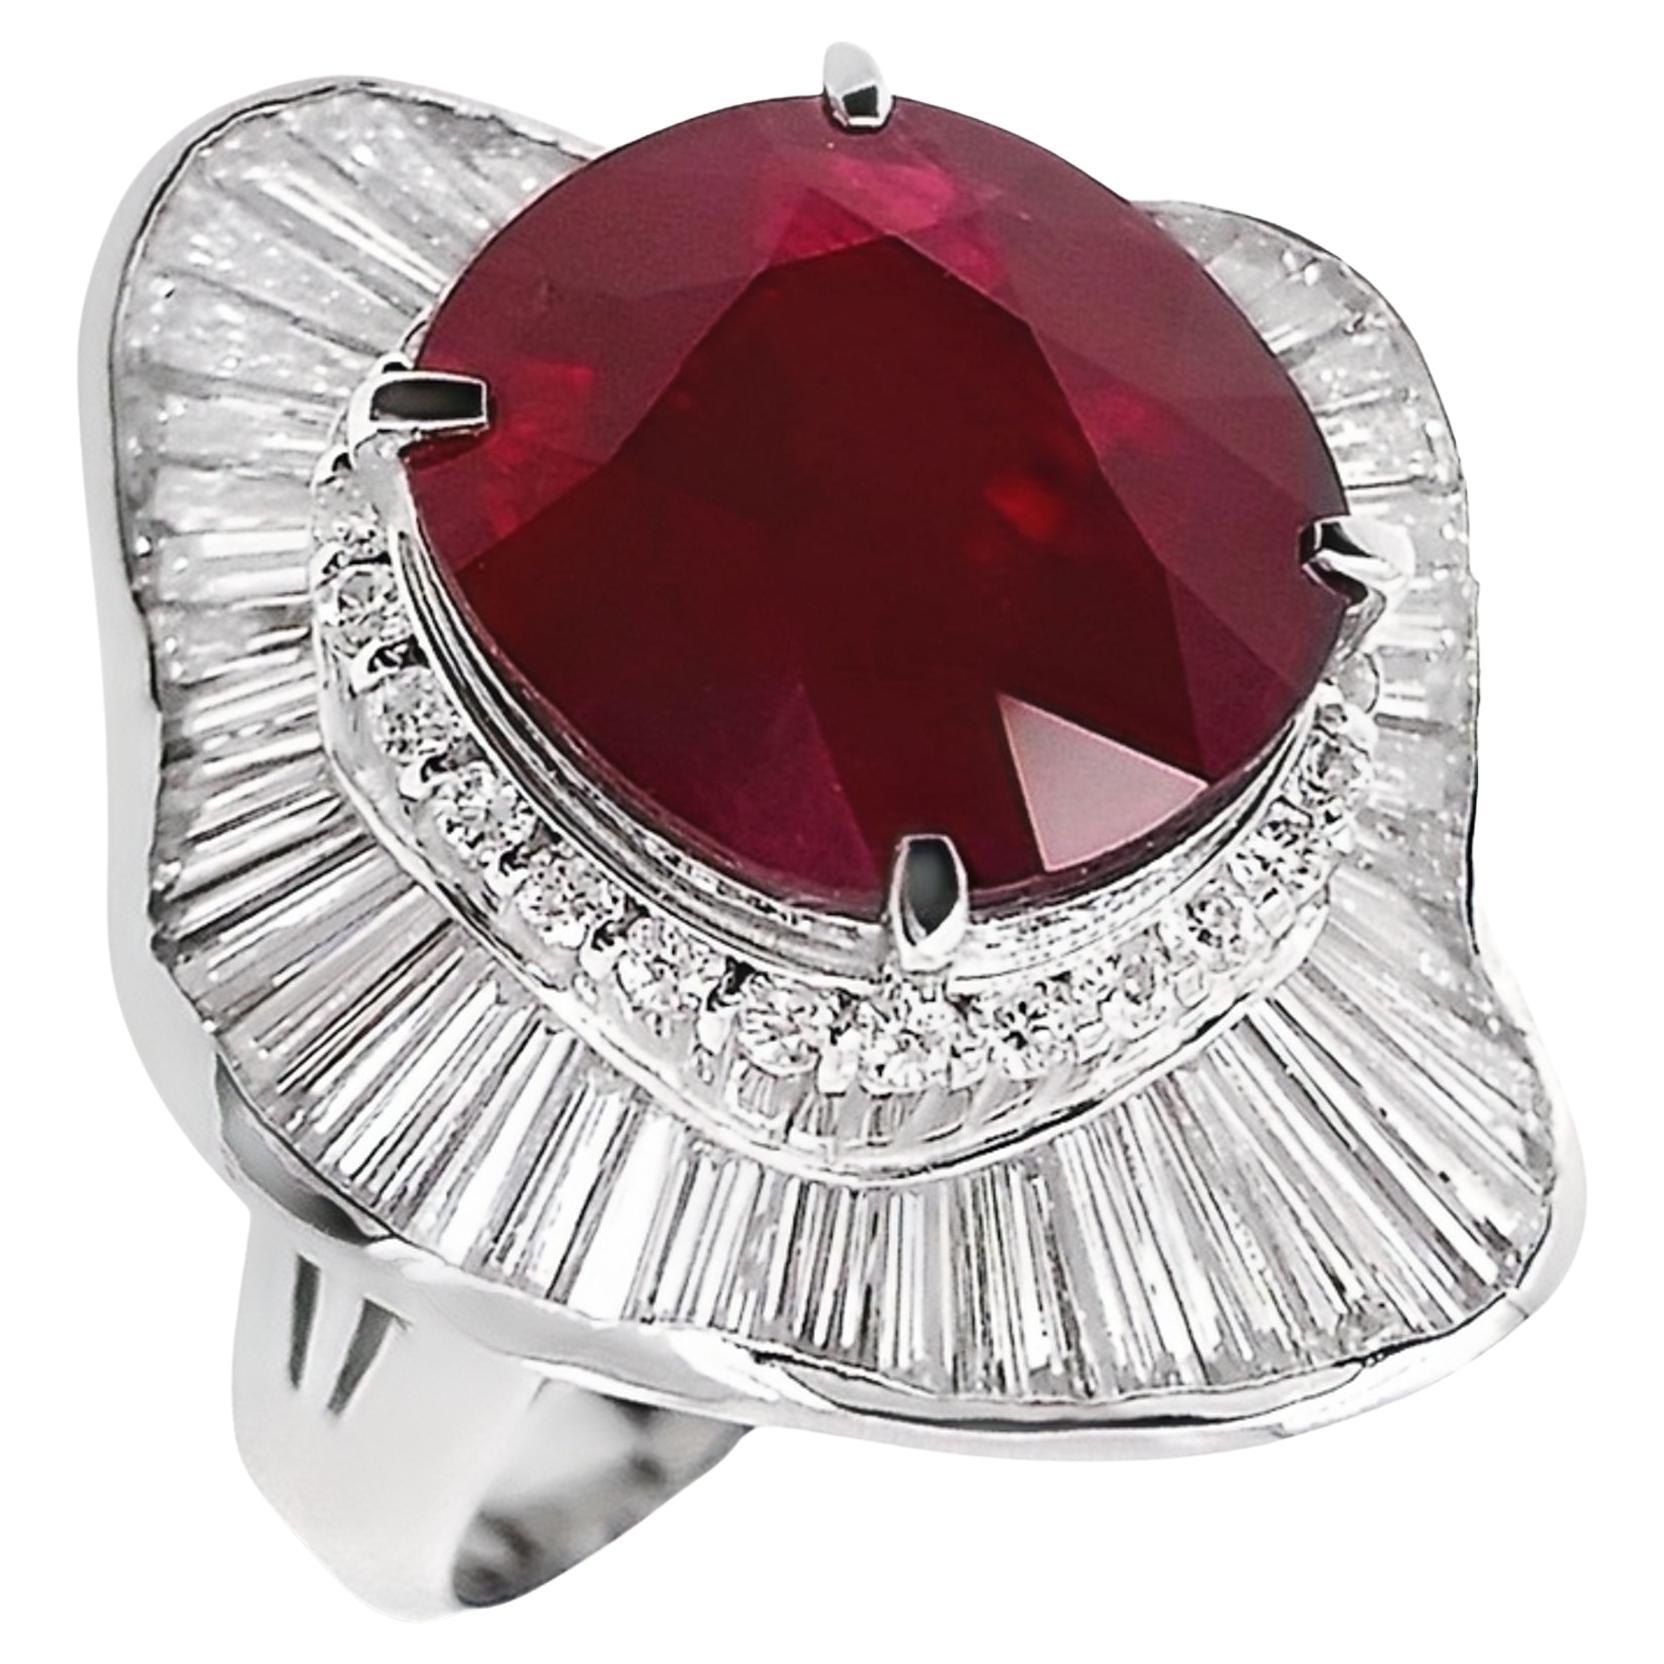 En vente :  Bague en platine certifiée IGI, rubis de Birmanie naturel de 9,39 carats et diamants naturels de 3,93 carats